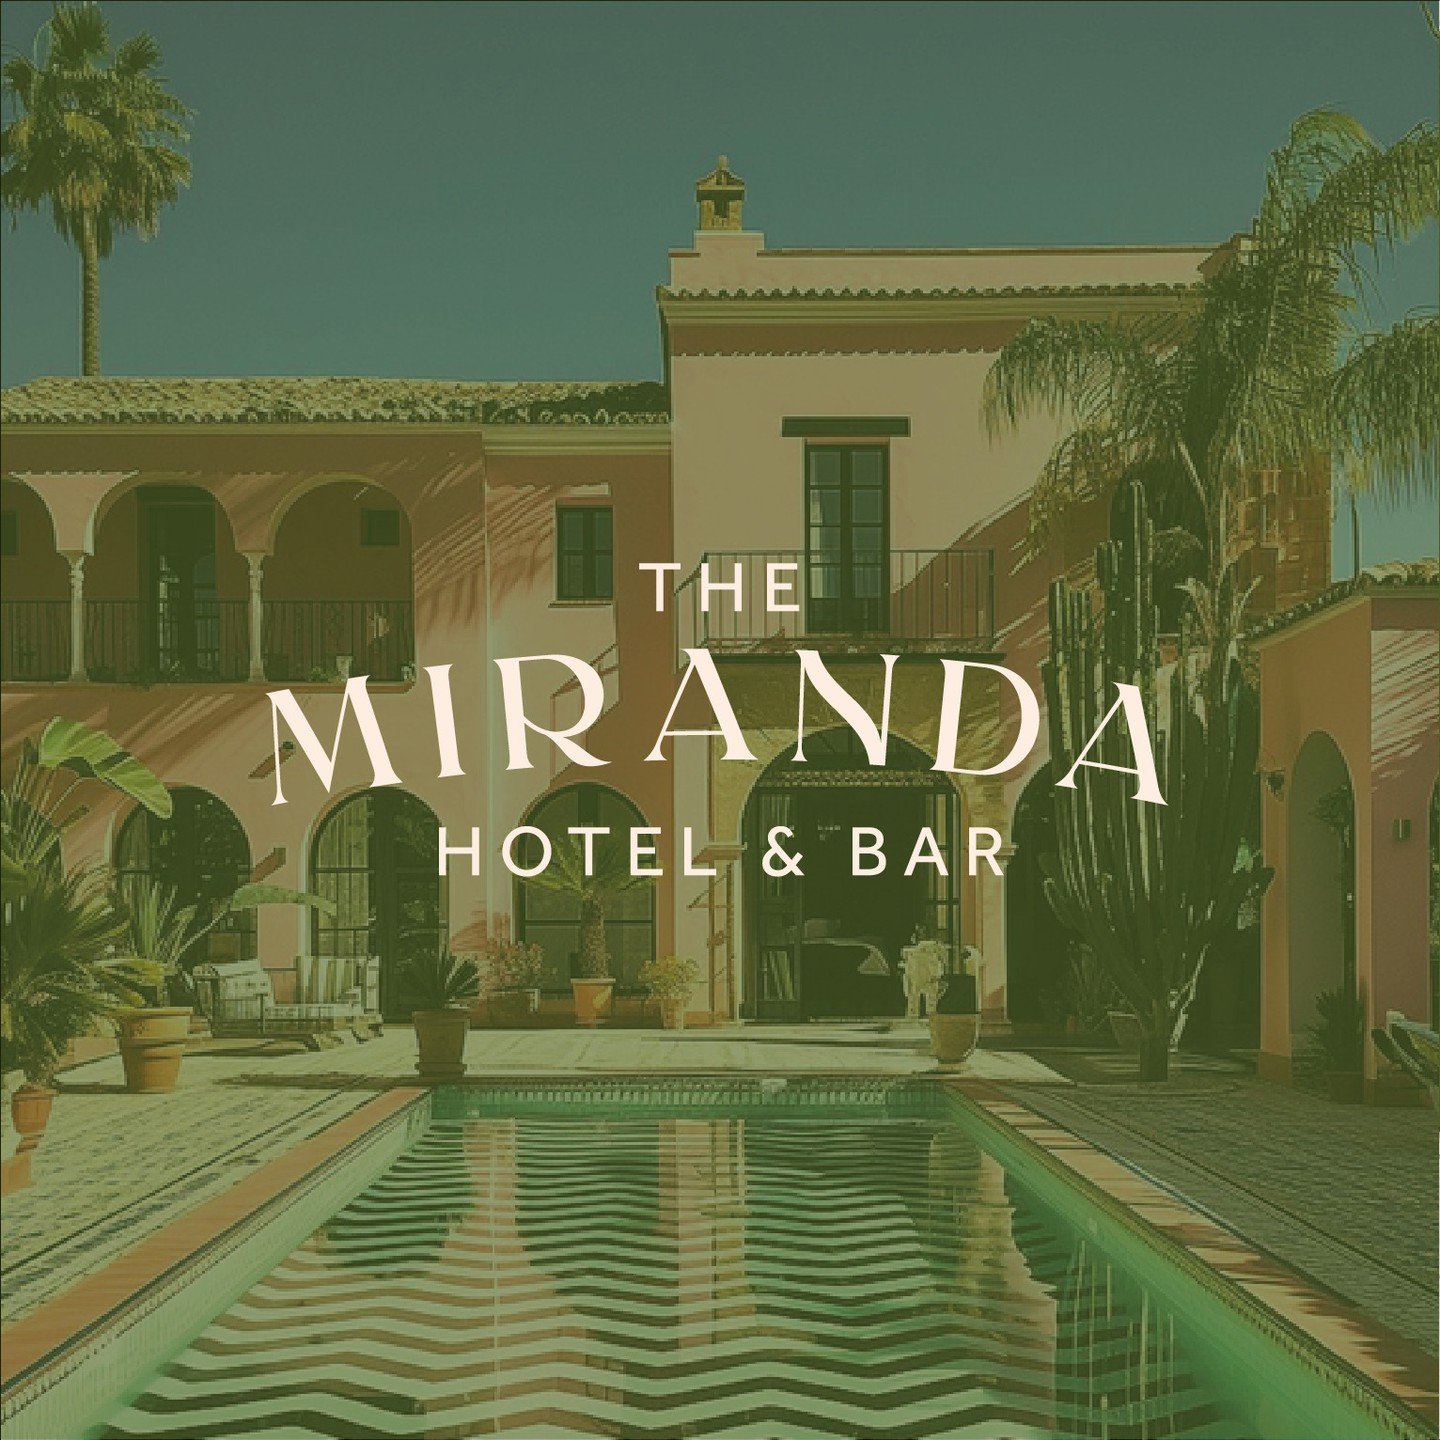 Presenting The Miranda Hotel &amp; Bar brand identity design.
#logodesigner #logo #branddesign #hotel #bar #branding #brandidentity #brandinspiration #branddevelopment #visualidentity #corporateidentity